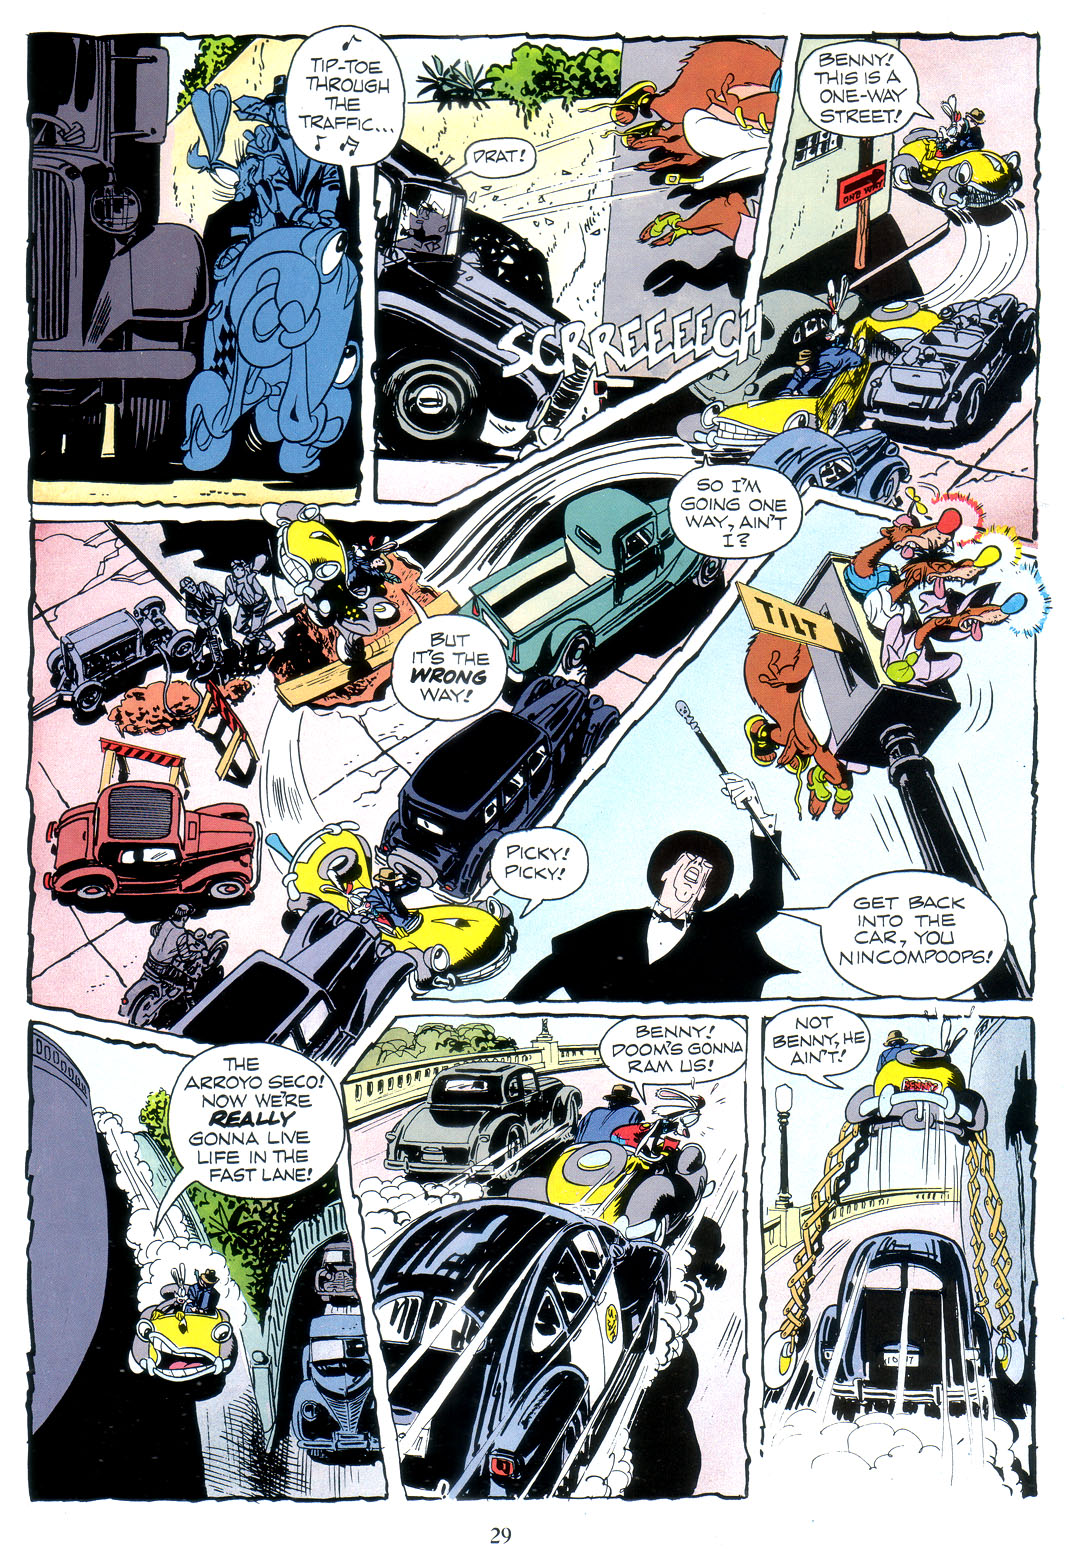 Marvel Graphic Novel issue 41 - Who Framed Roger Rabbit - Page 31